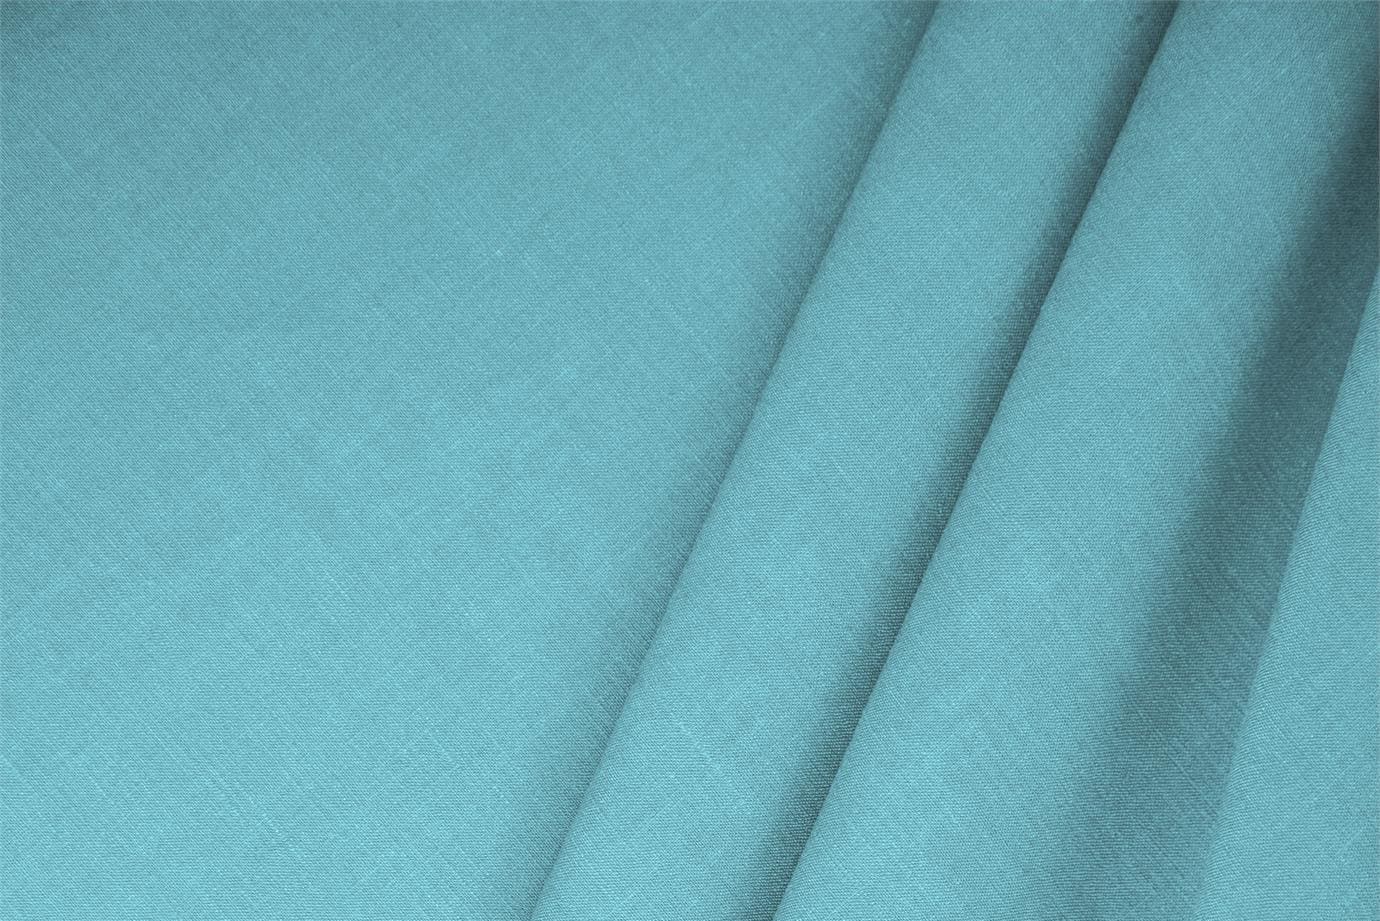 Turquoise Blue Linen, Stretch, Viscose Linen Blend fabric for dressmaking